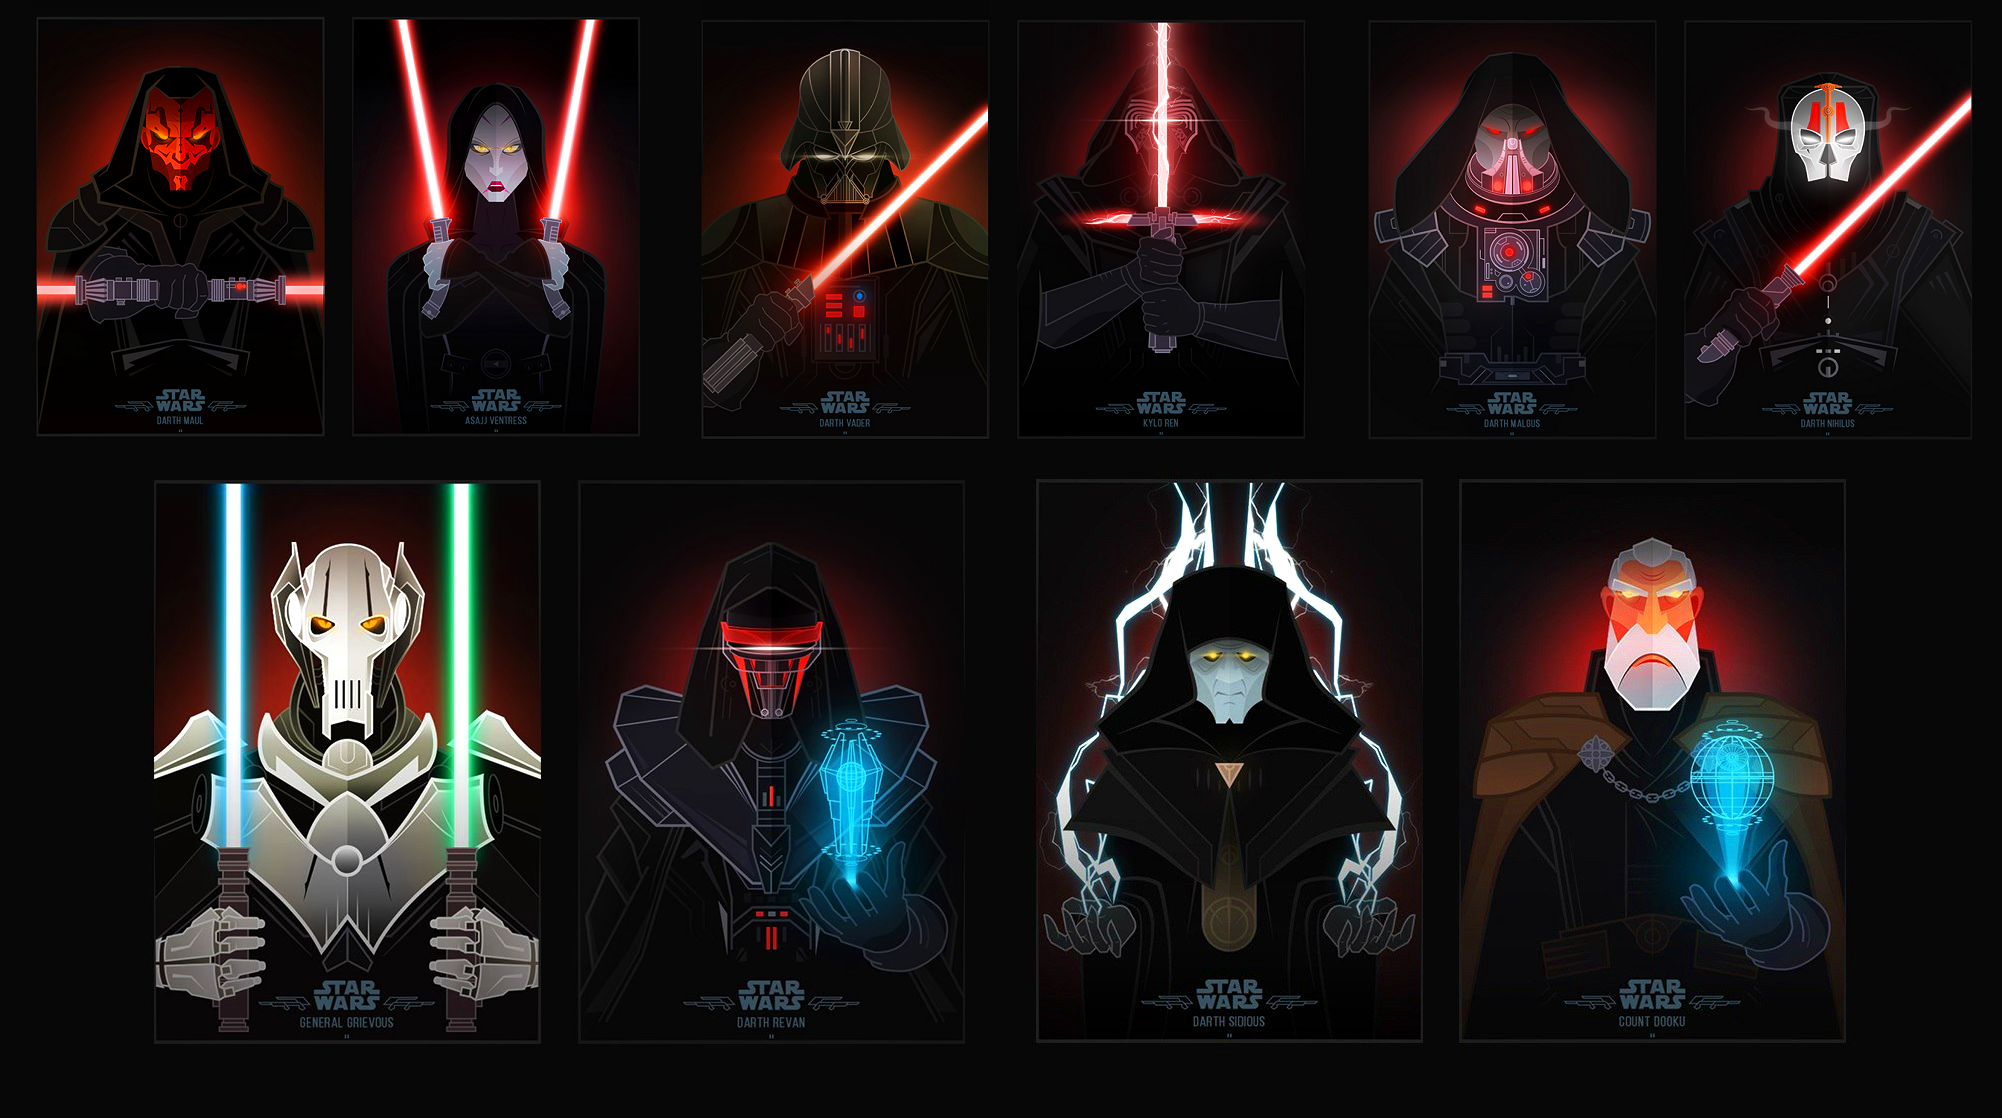 Star Wars Villain Poster Wallpapers